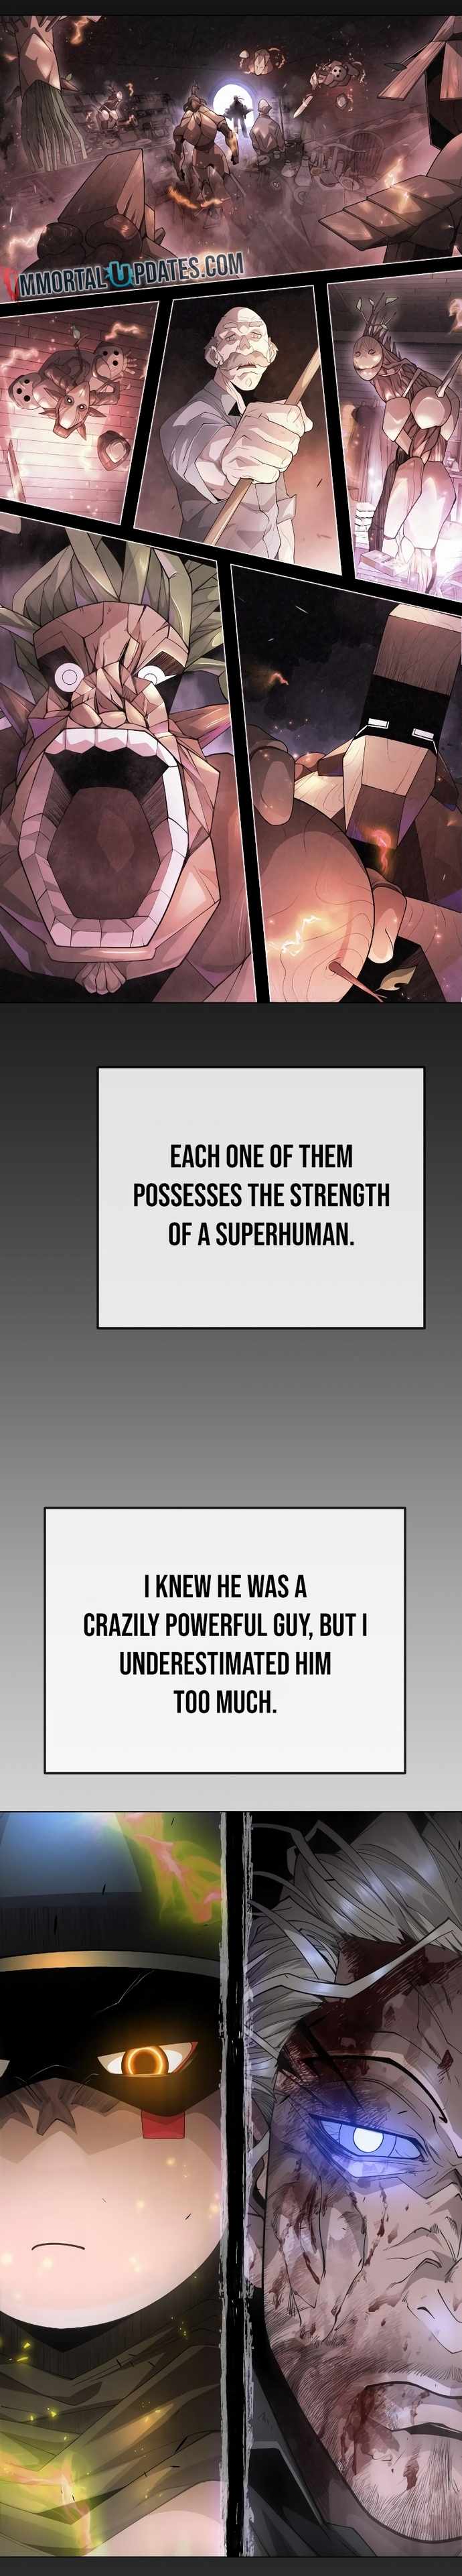 Superhuman Era Chapter 174